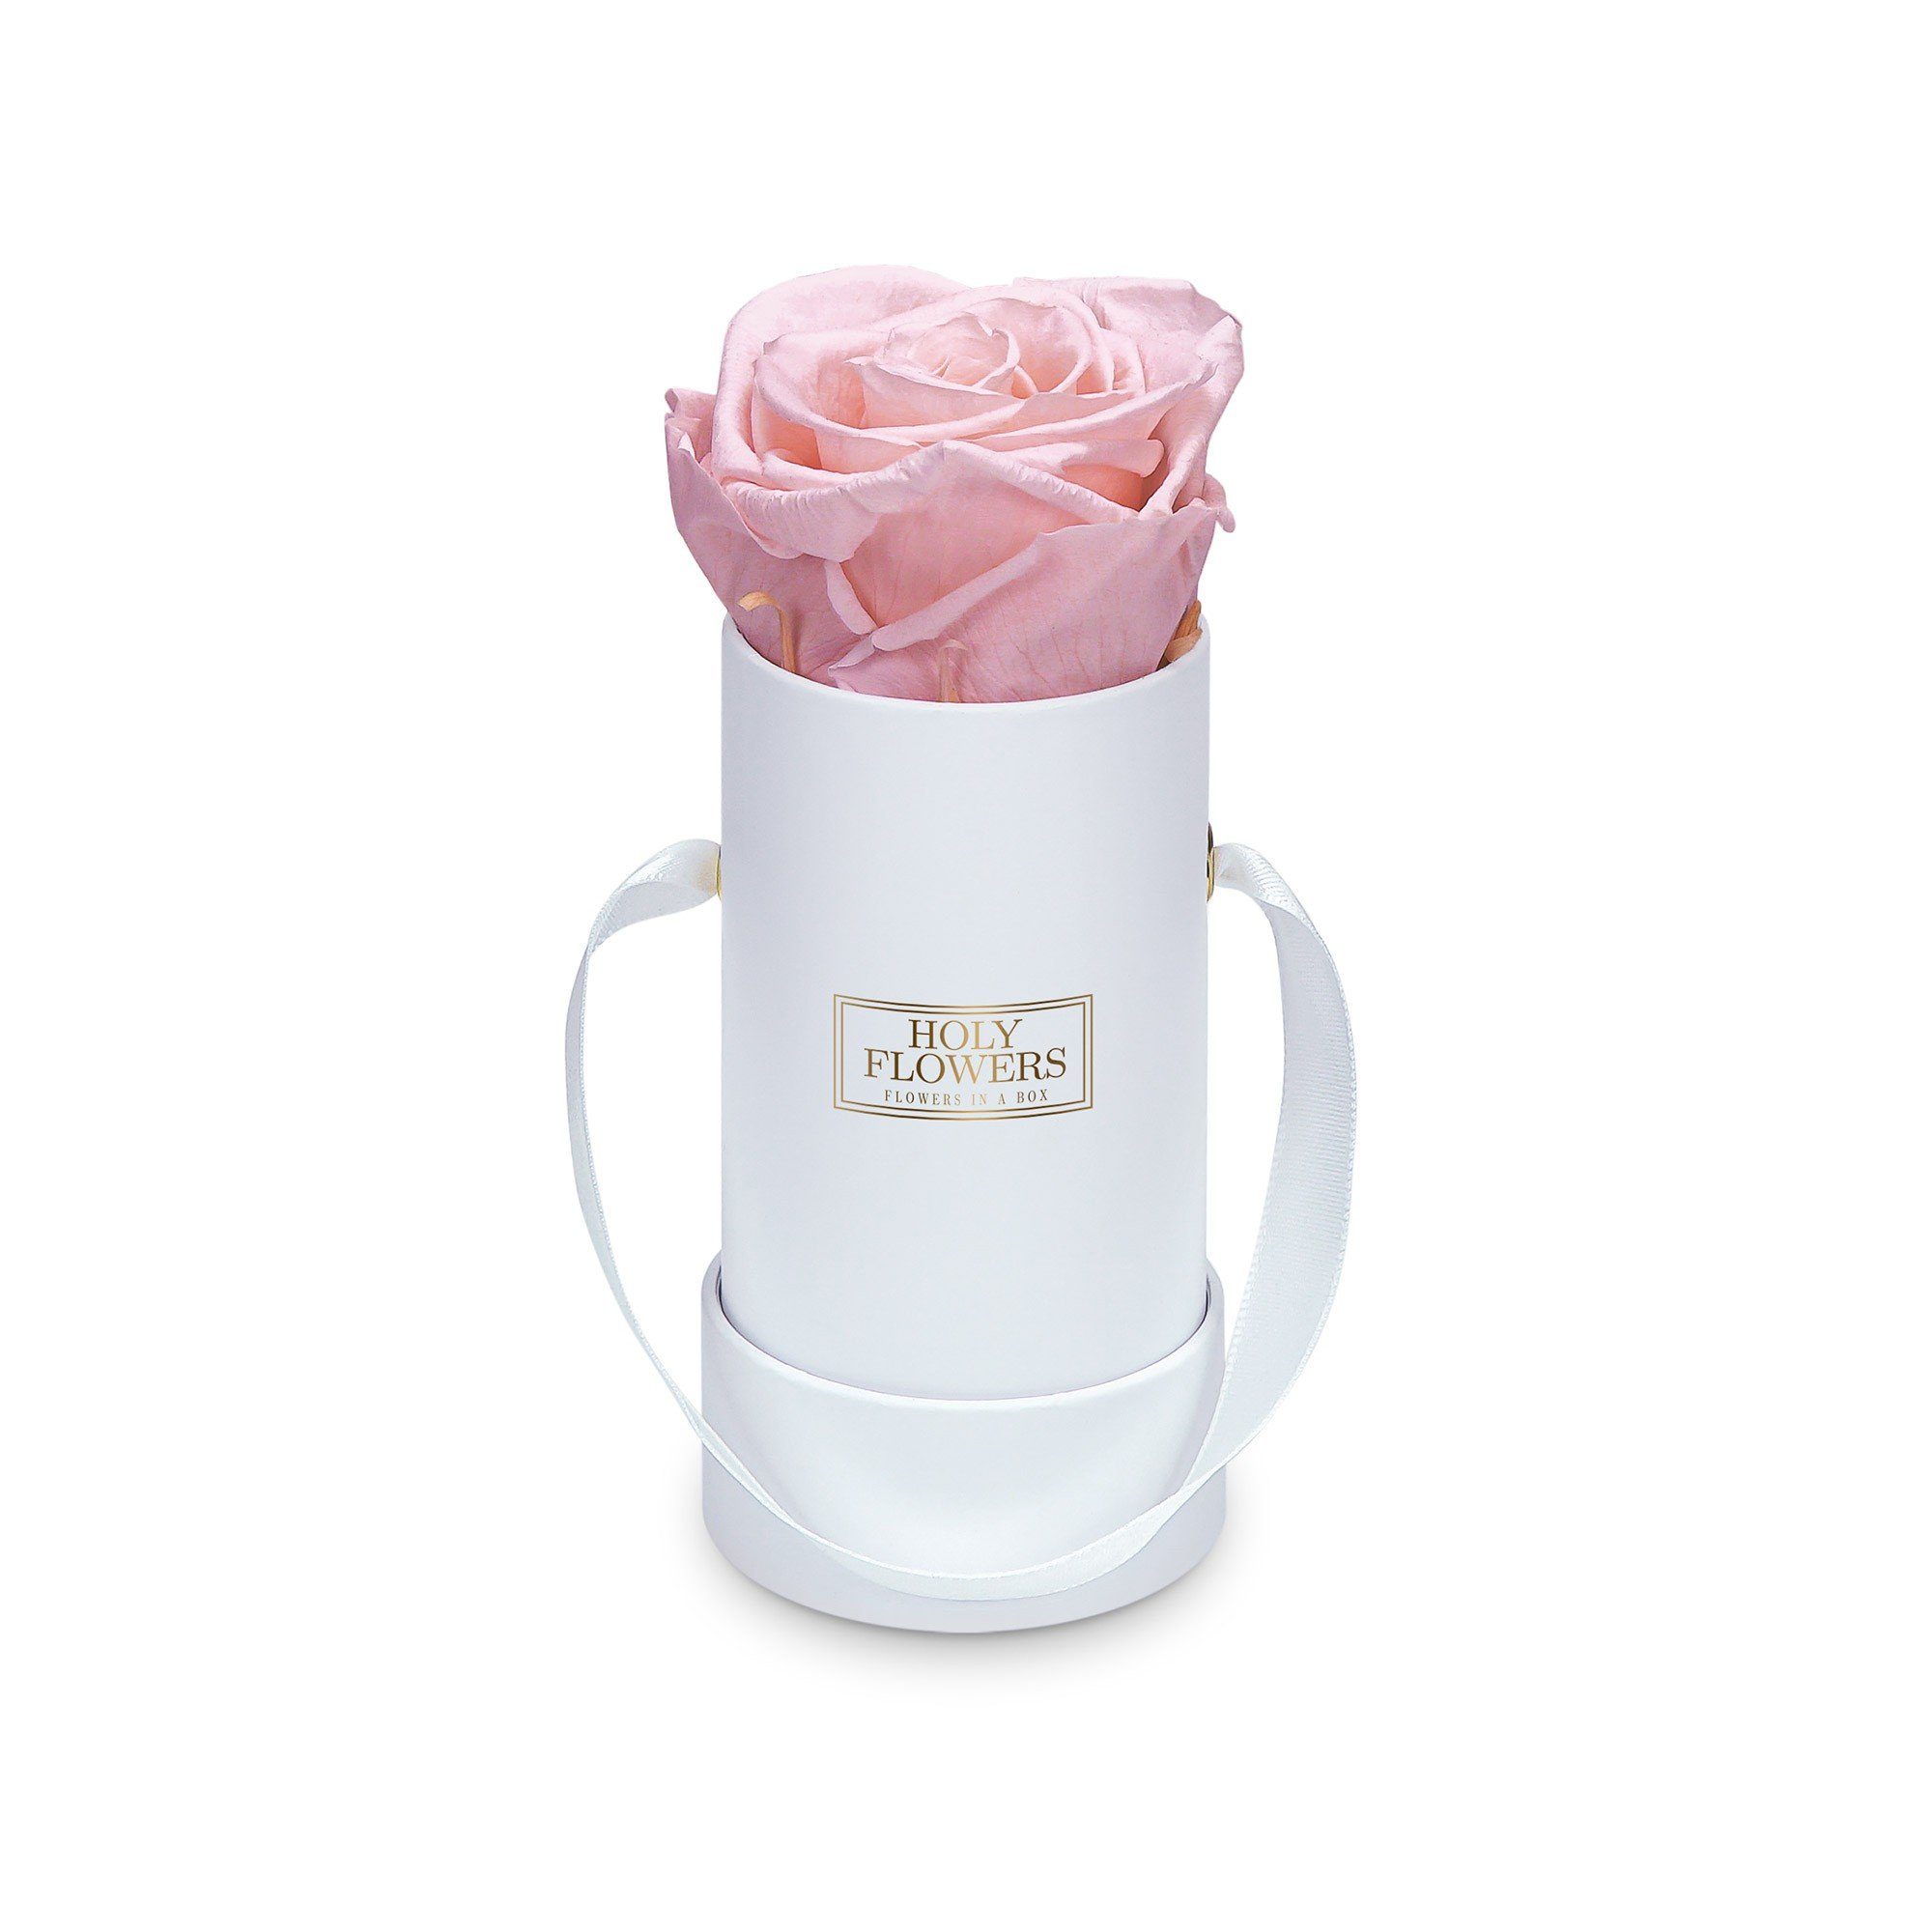 Kunstblume Runde Rosenbox in weiß mit 1er Infinity Rose I 3 Jahre haltbar I Echte, duftende konservierte Blumen I by Raul Richter Infinity Rose, Holy Flowers, Höhe 9 cm